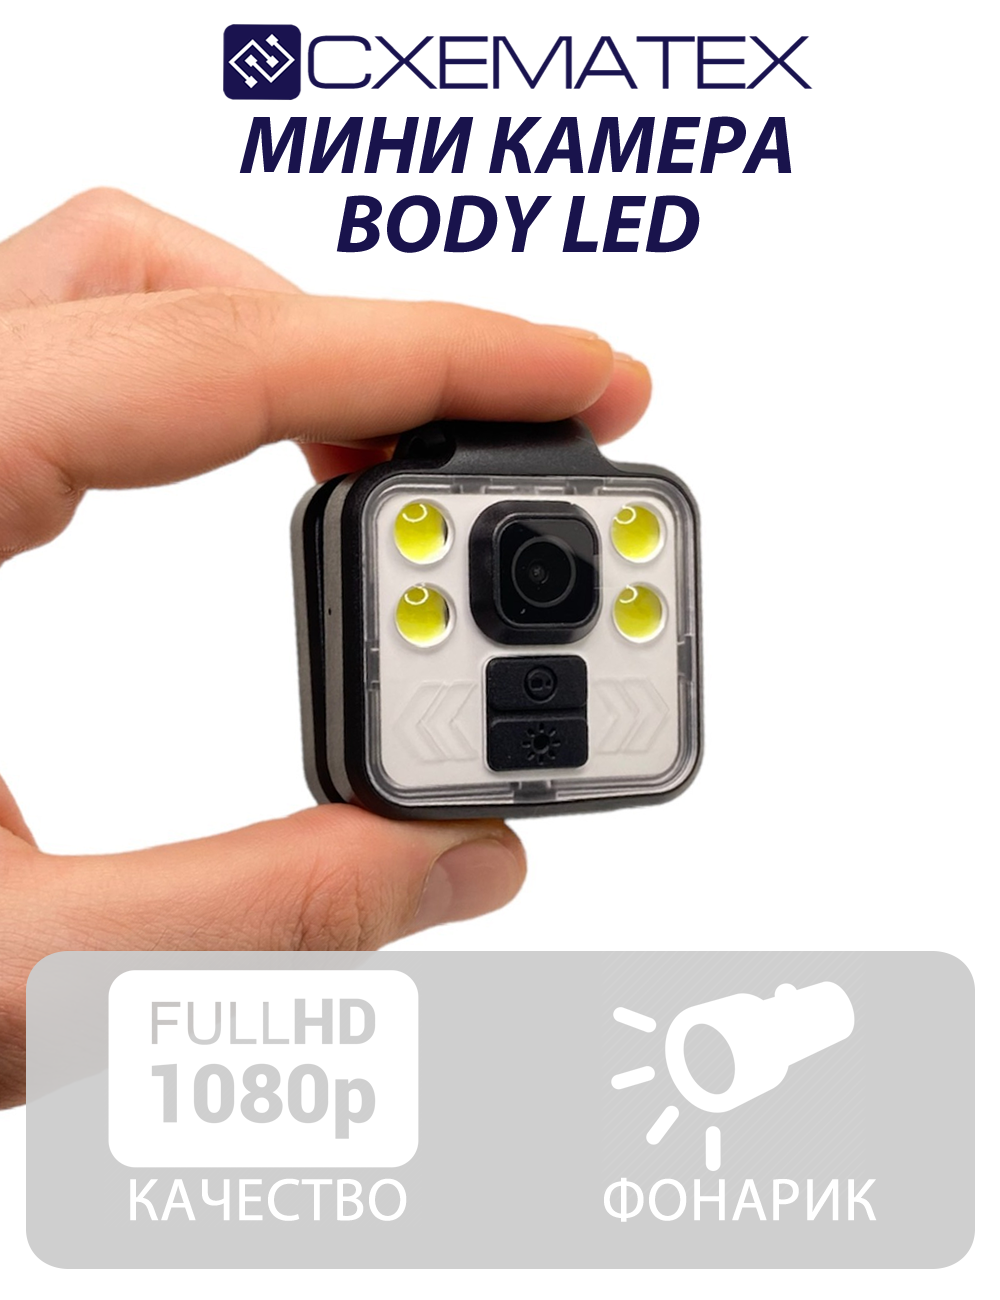 Мини камера схематех BODY LED / встроенный фонарик